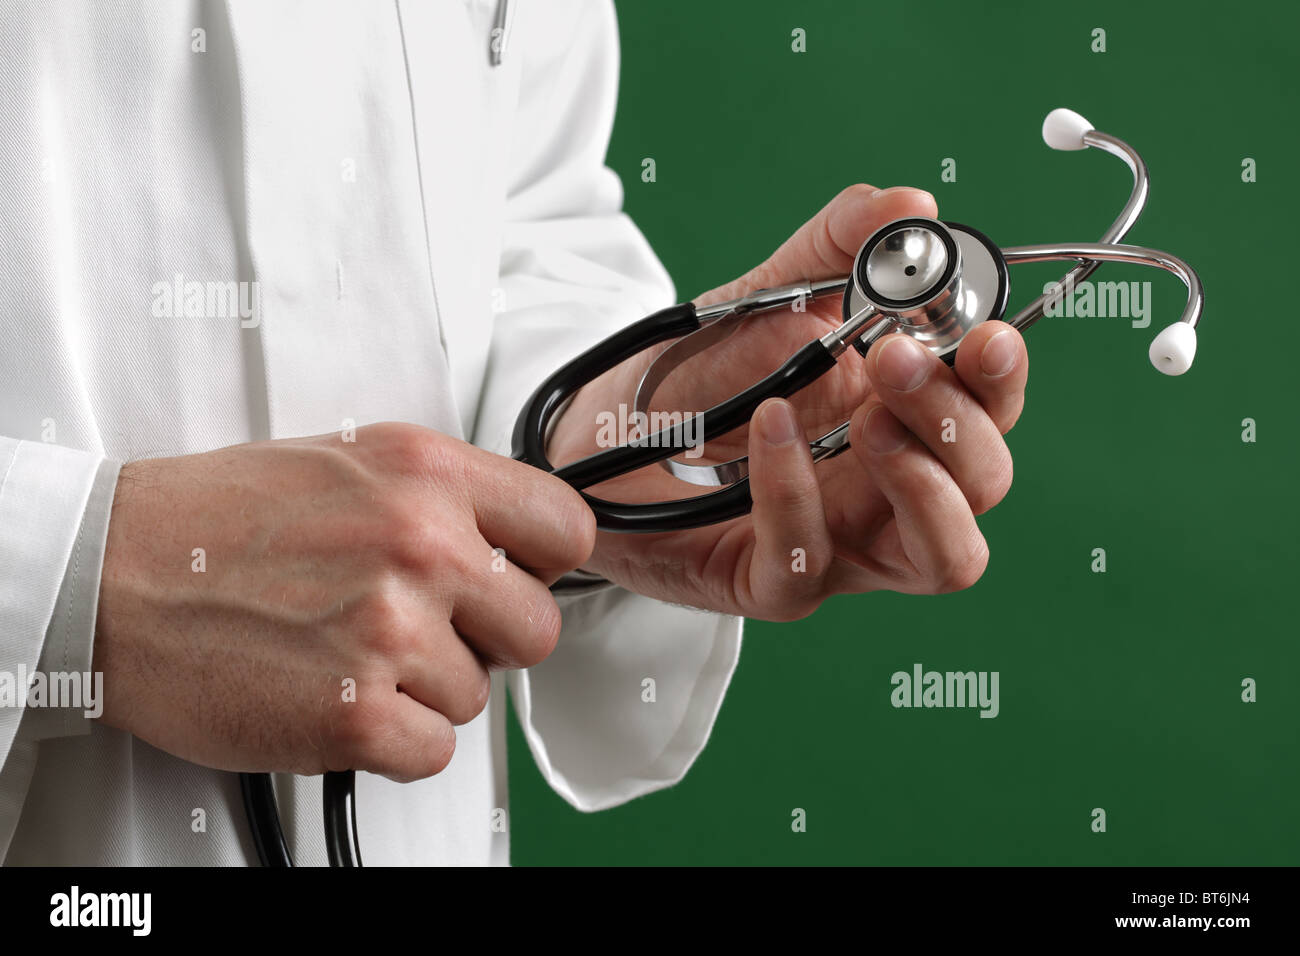 Doctor holding stethoscope Stock Photo